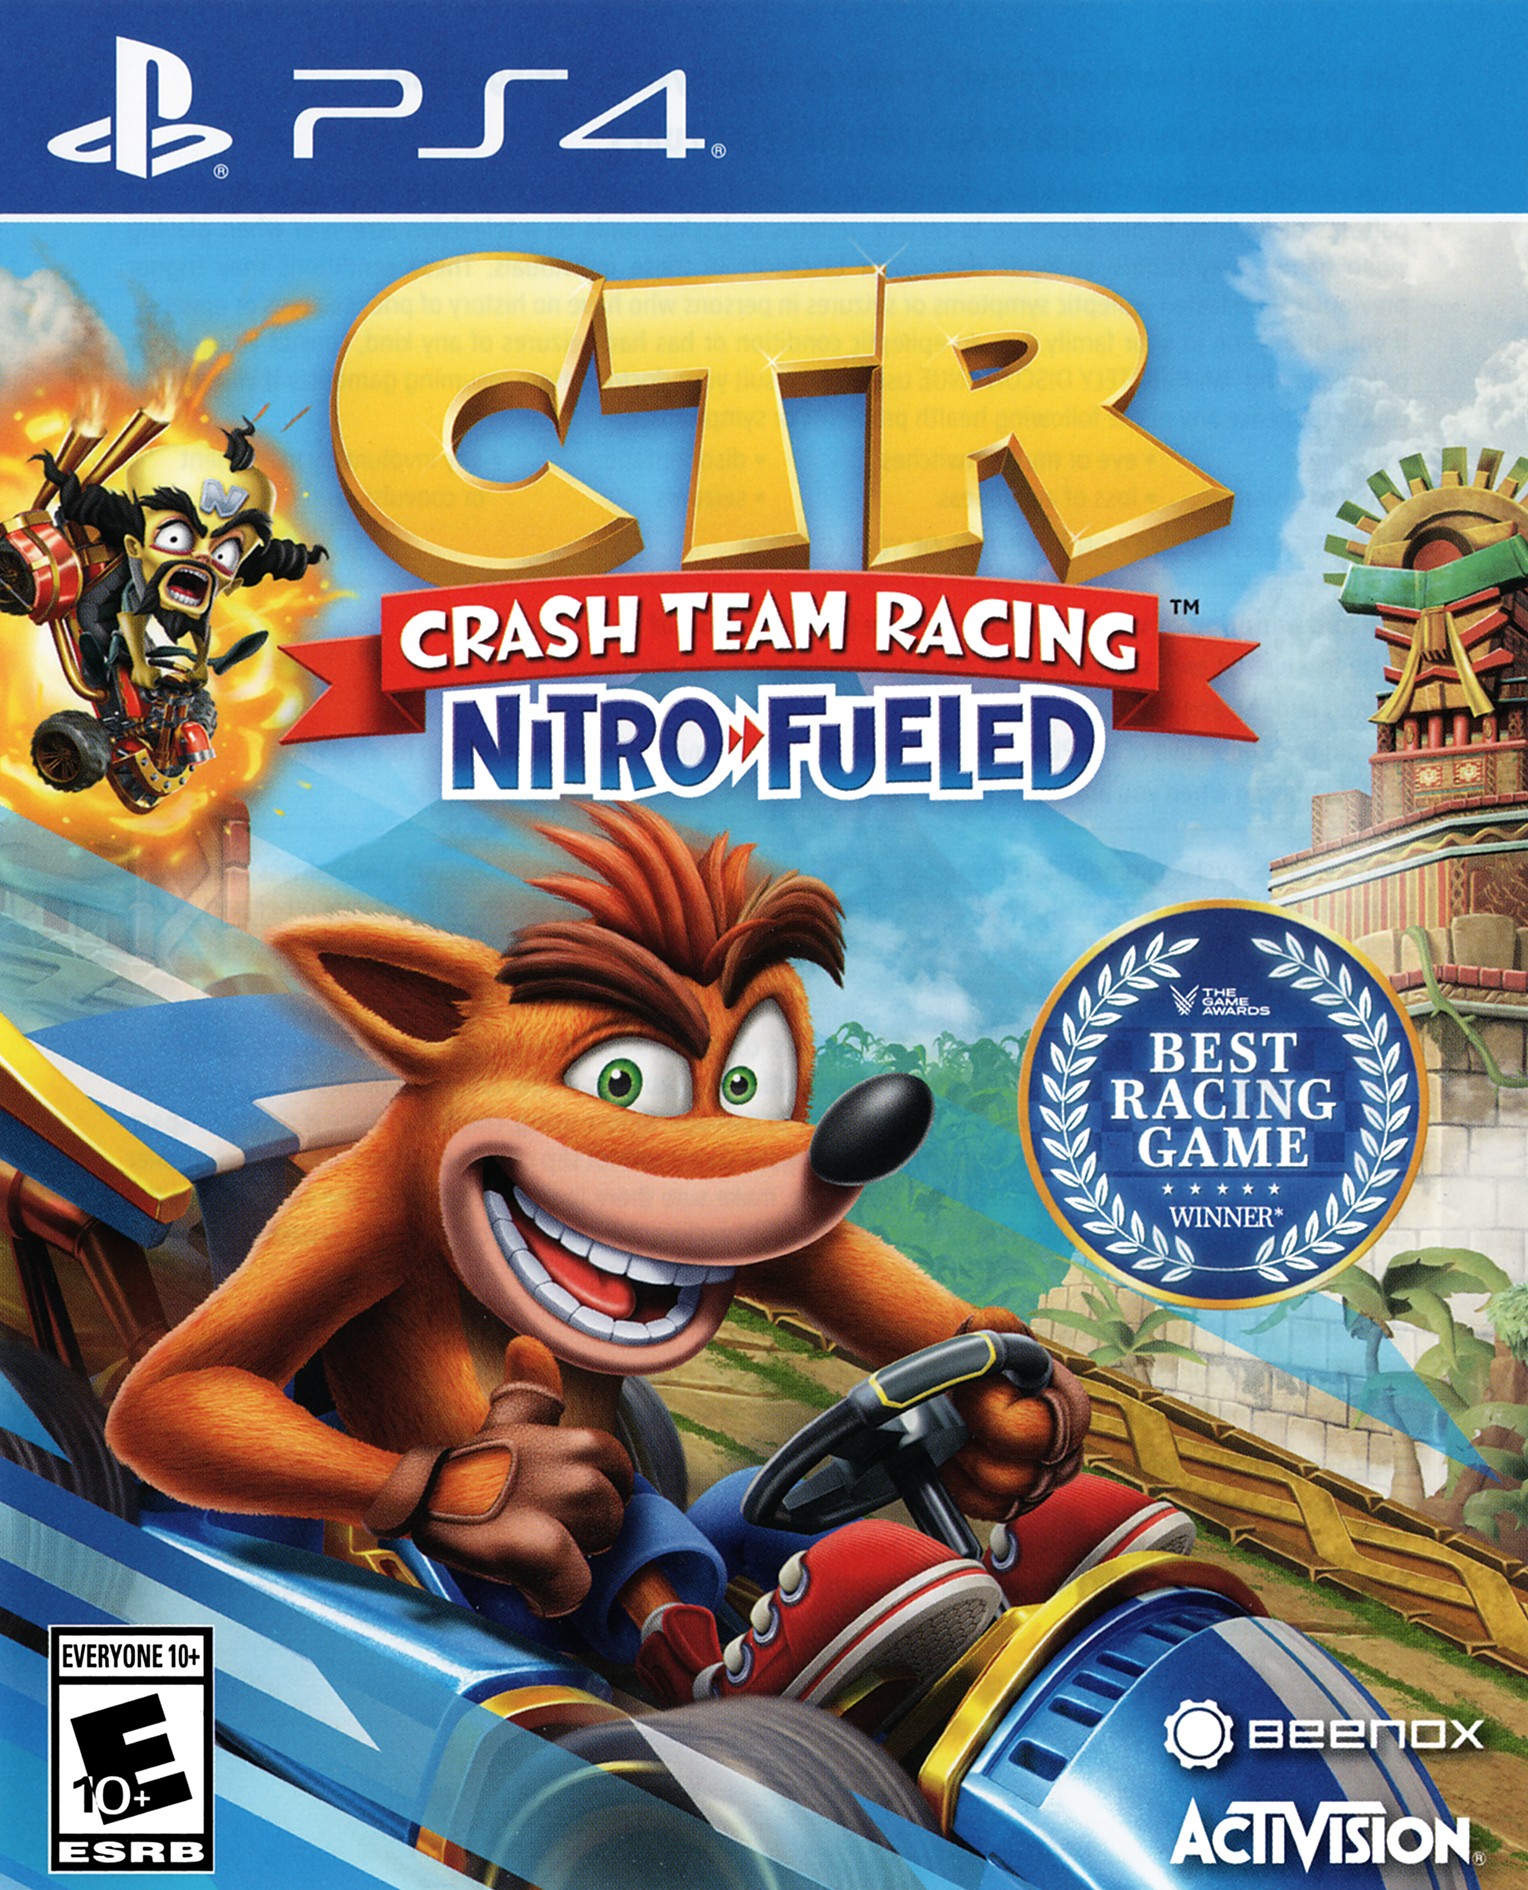 '[CTR] Crash Team Racing: Nitro Fueled'